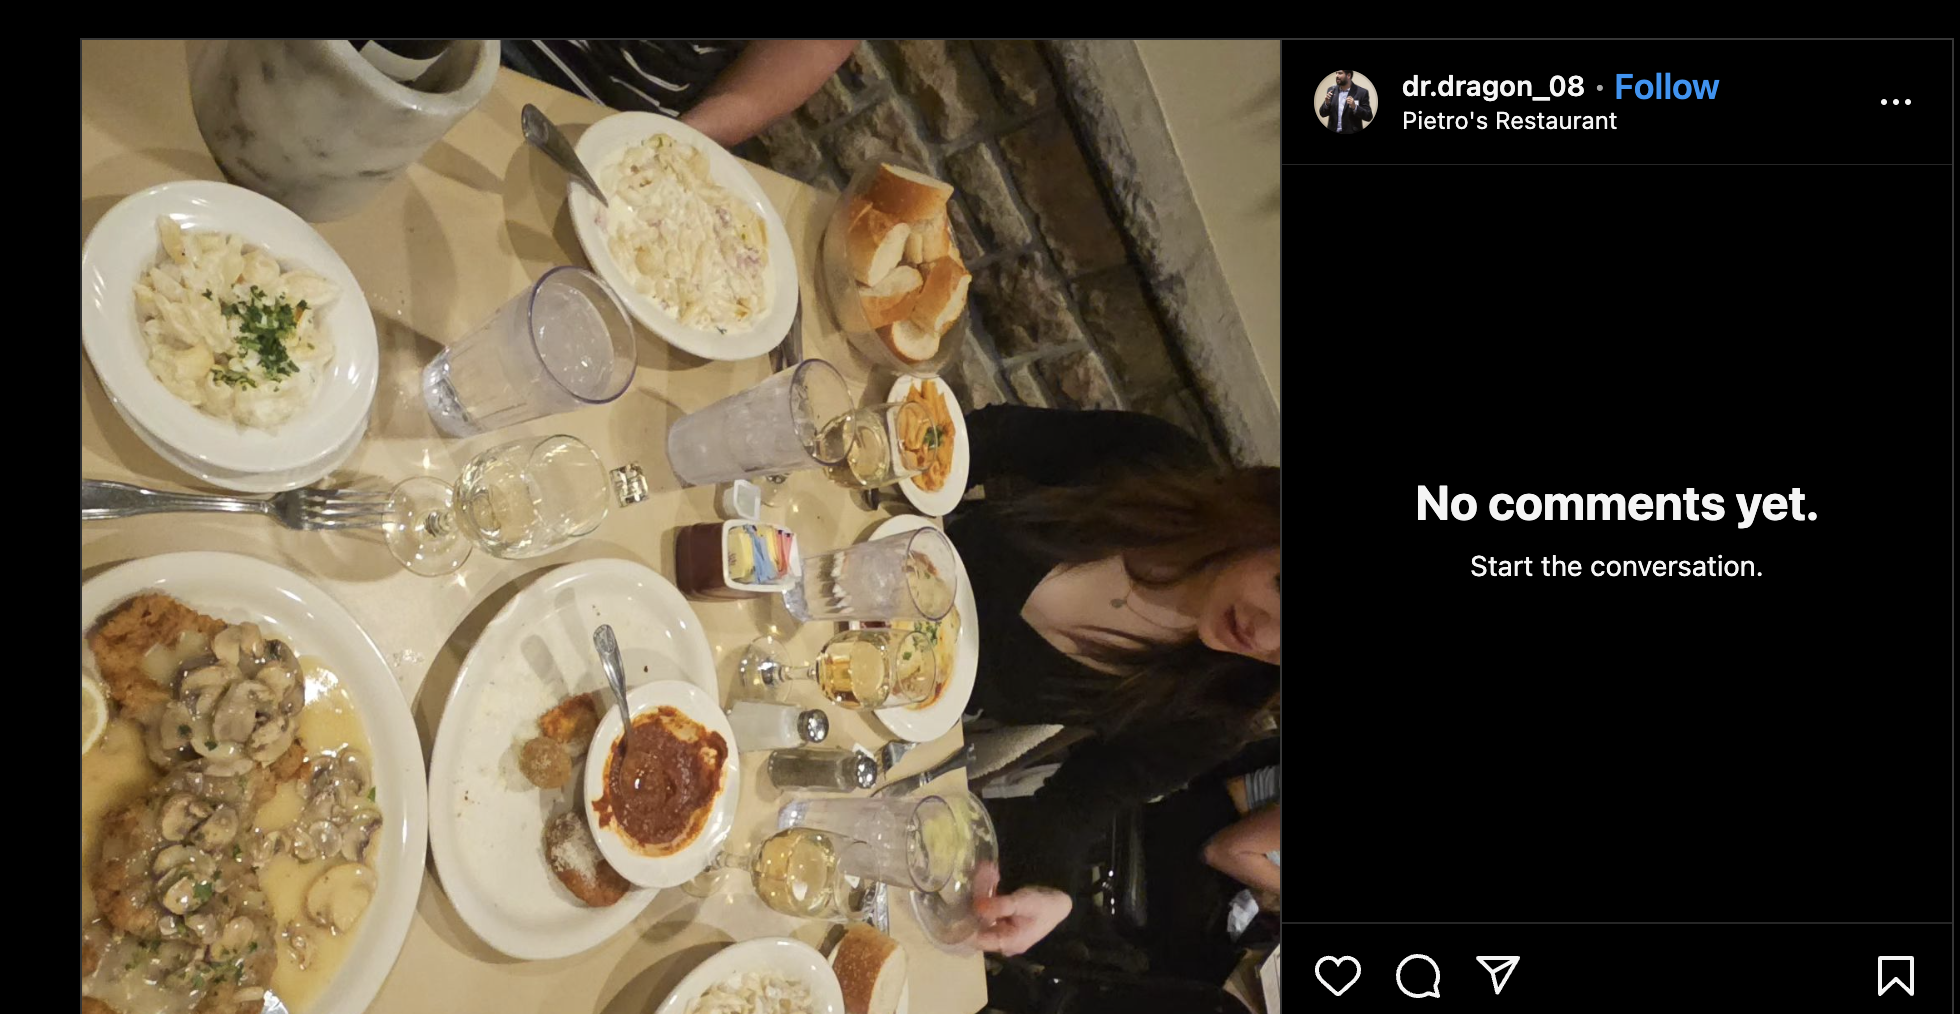 Instagram image of food from Pietro's dinner.